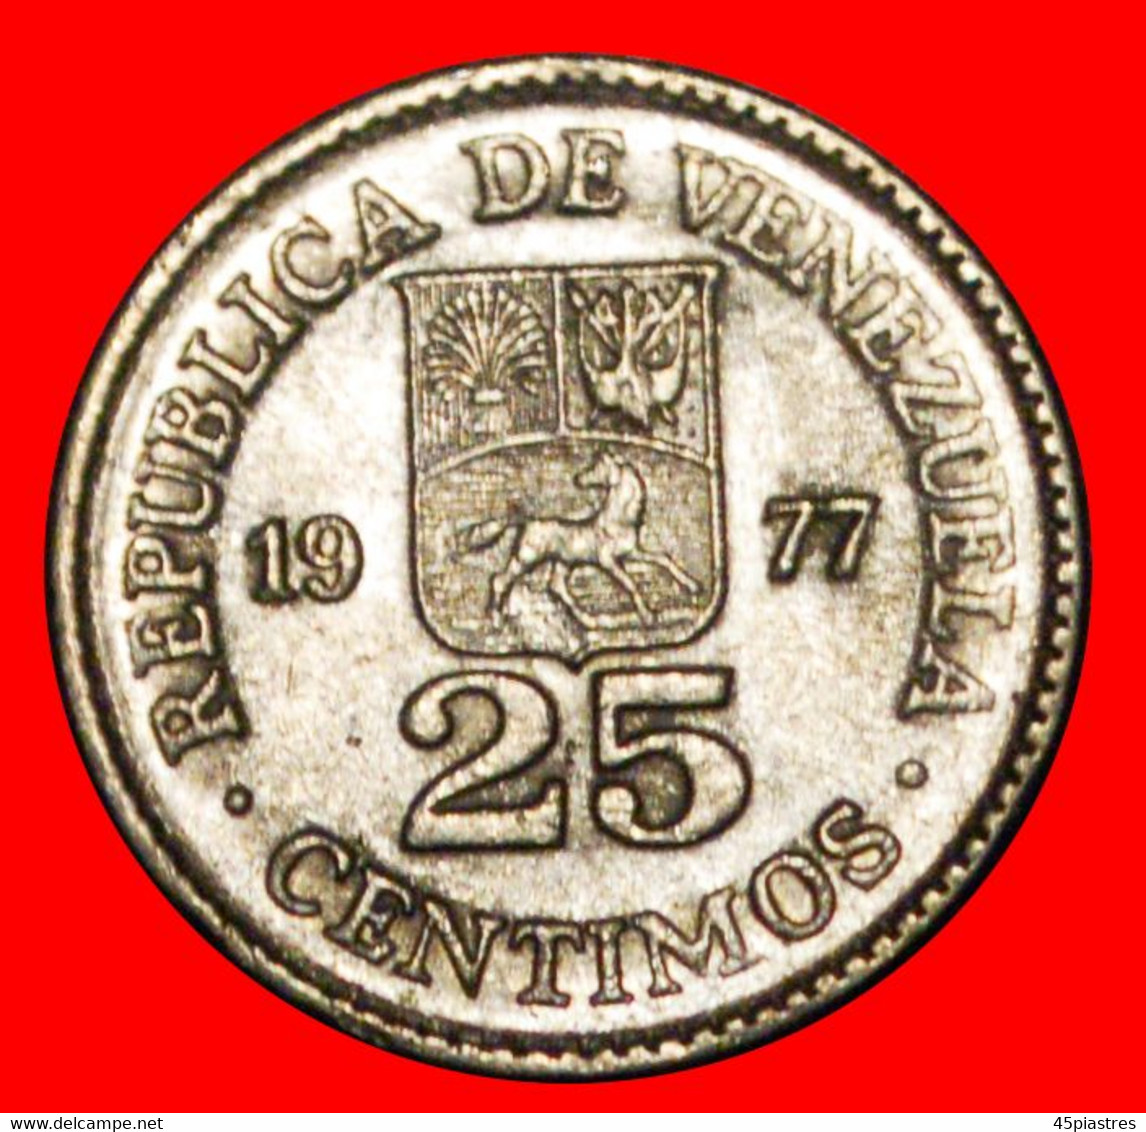 * GERMANY: VENEZUELA ★ 25 CENTIMOS 1977 MINT LUSTRE! BOLIVAR (1783-1830) LOW START ★ NO RESERVE! - Venezuela